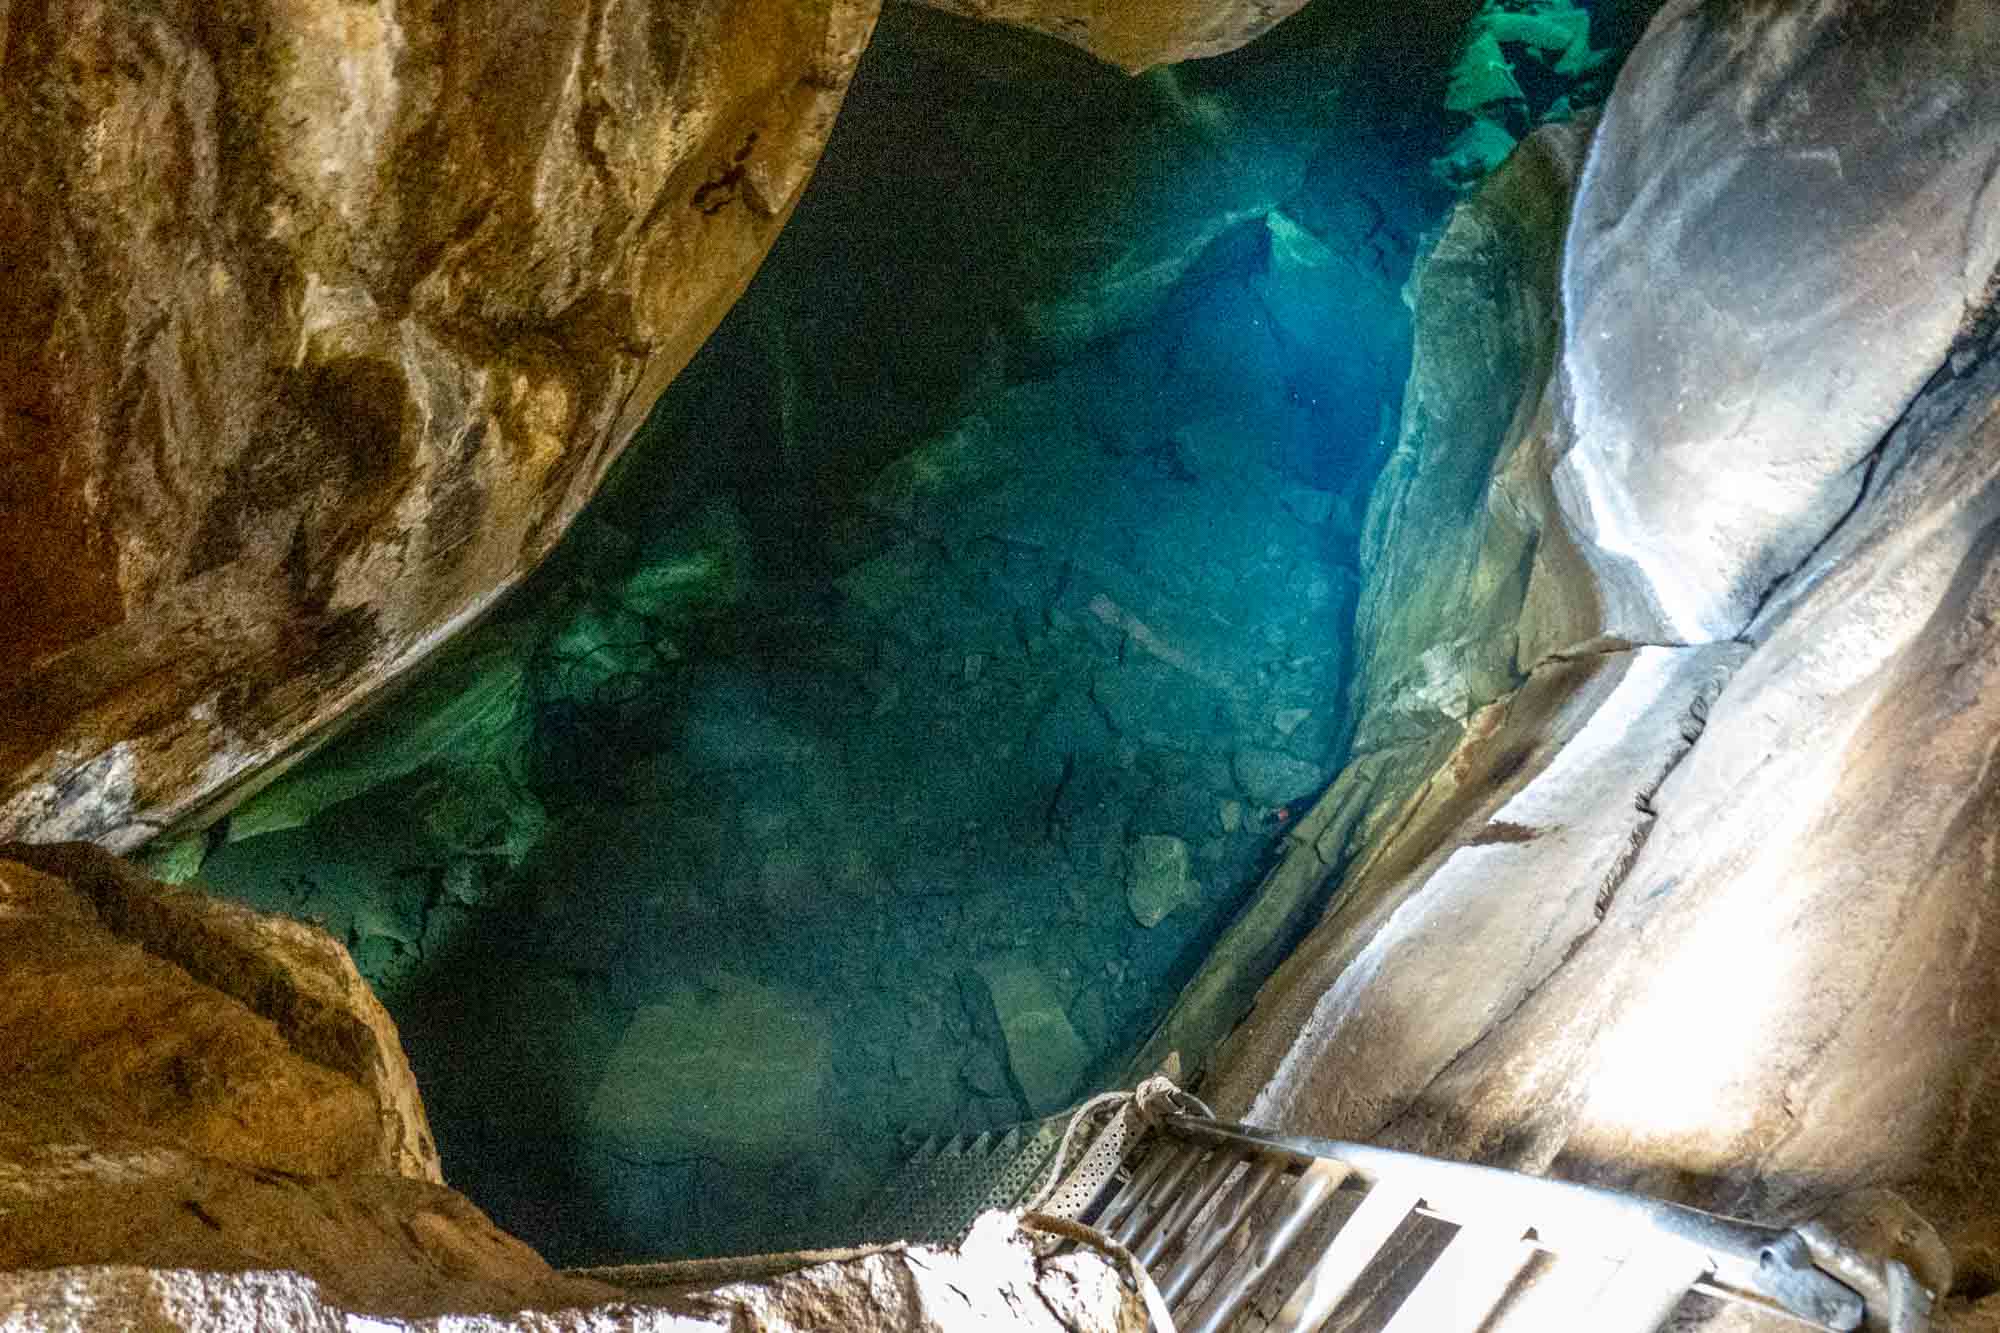 Steel ladder descending in eerie blue waters inside a lava cave